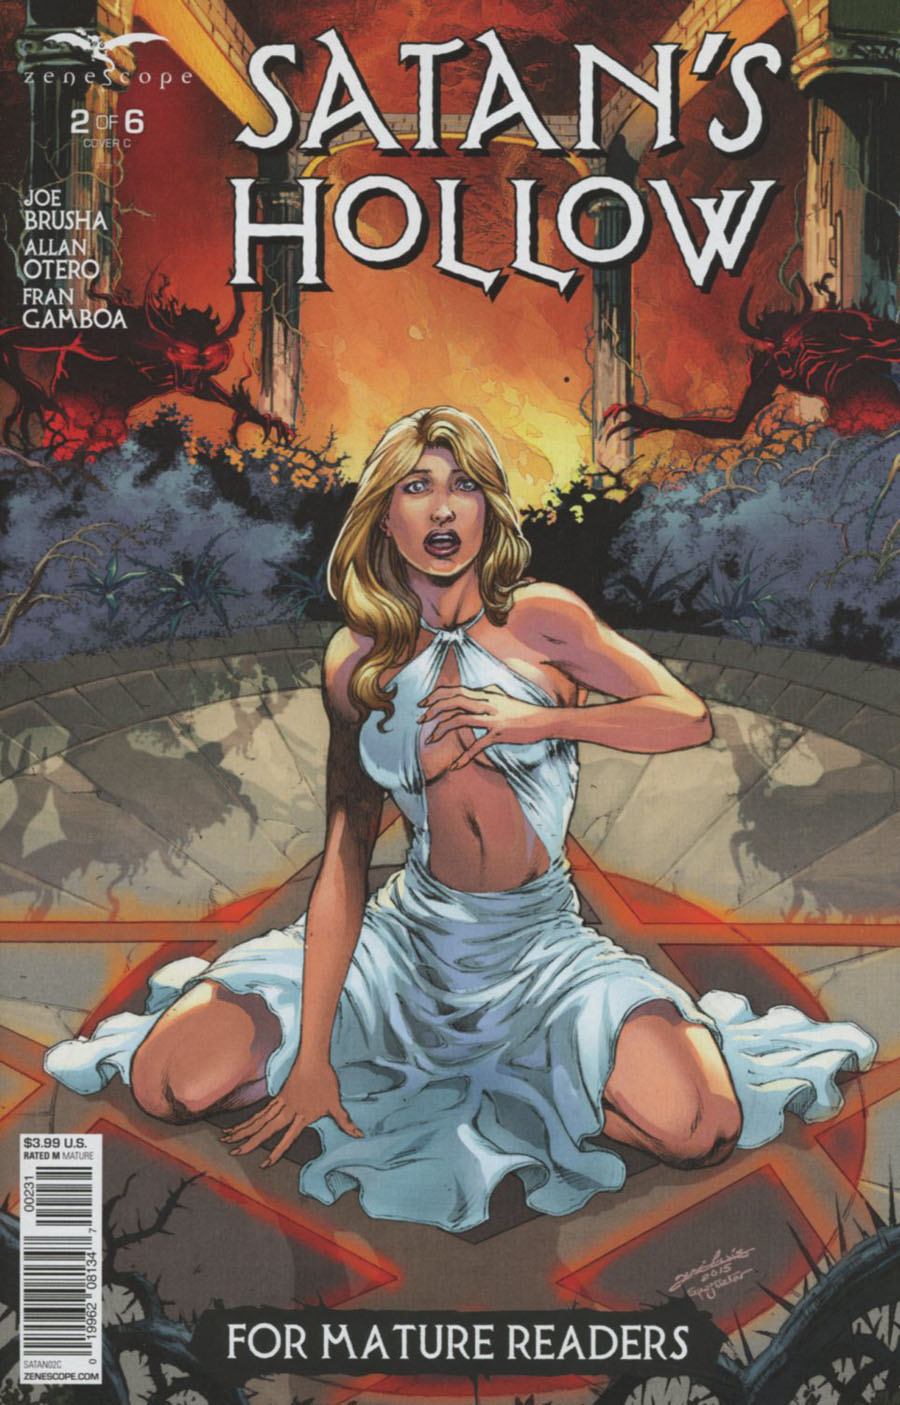 Grimm Fairy Tales Presents Satans Hollow #2 Cover C Jose Luis